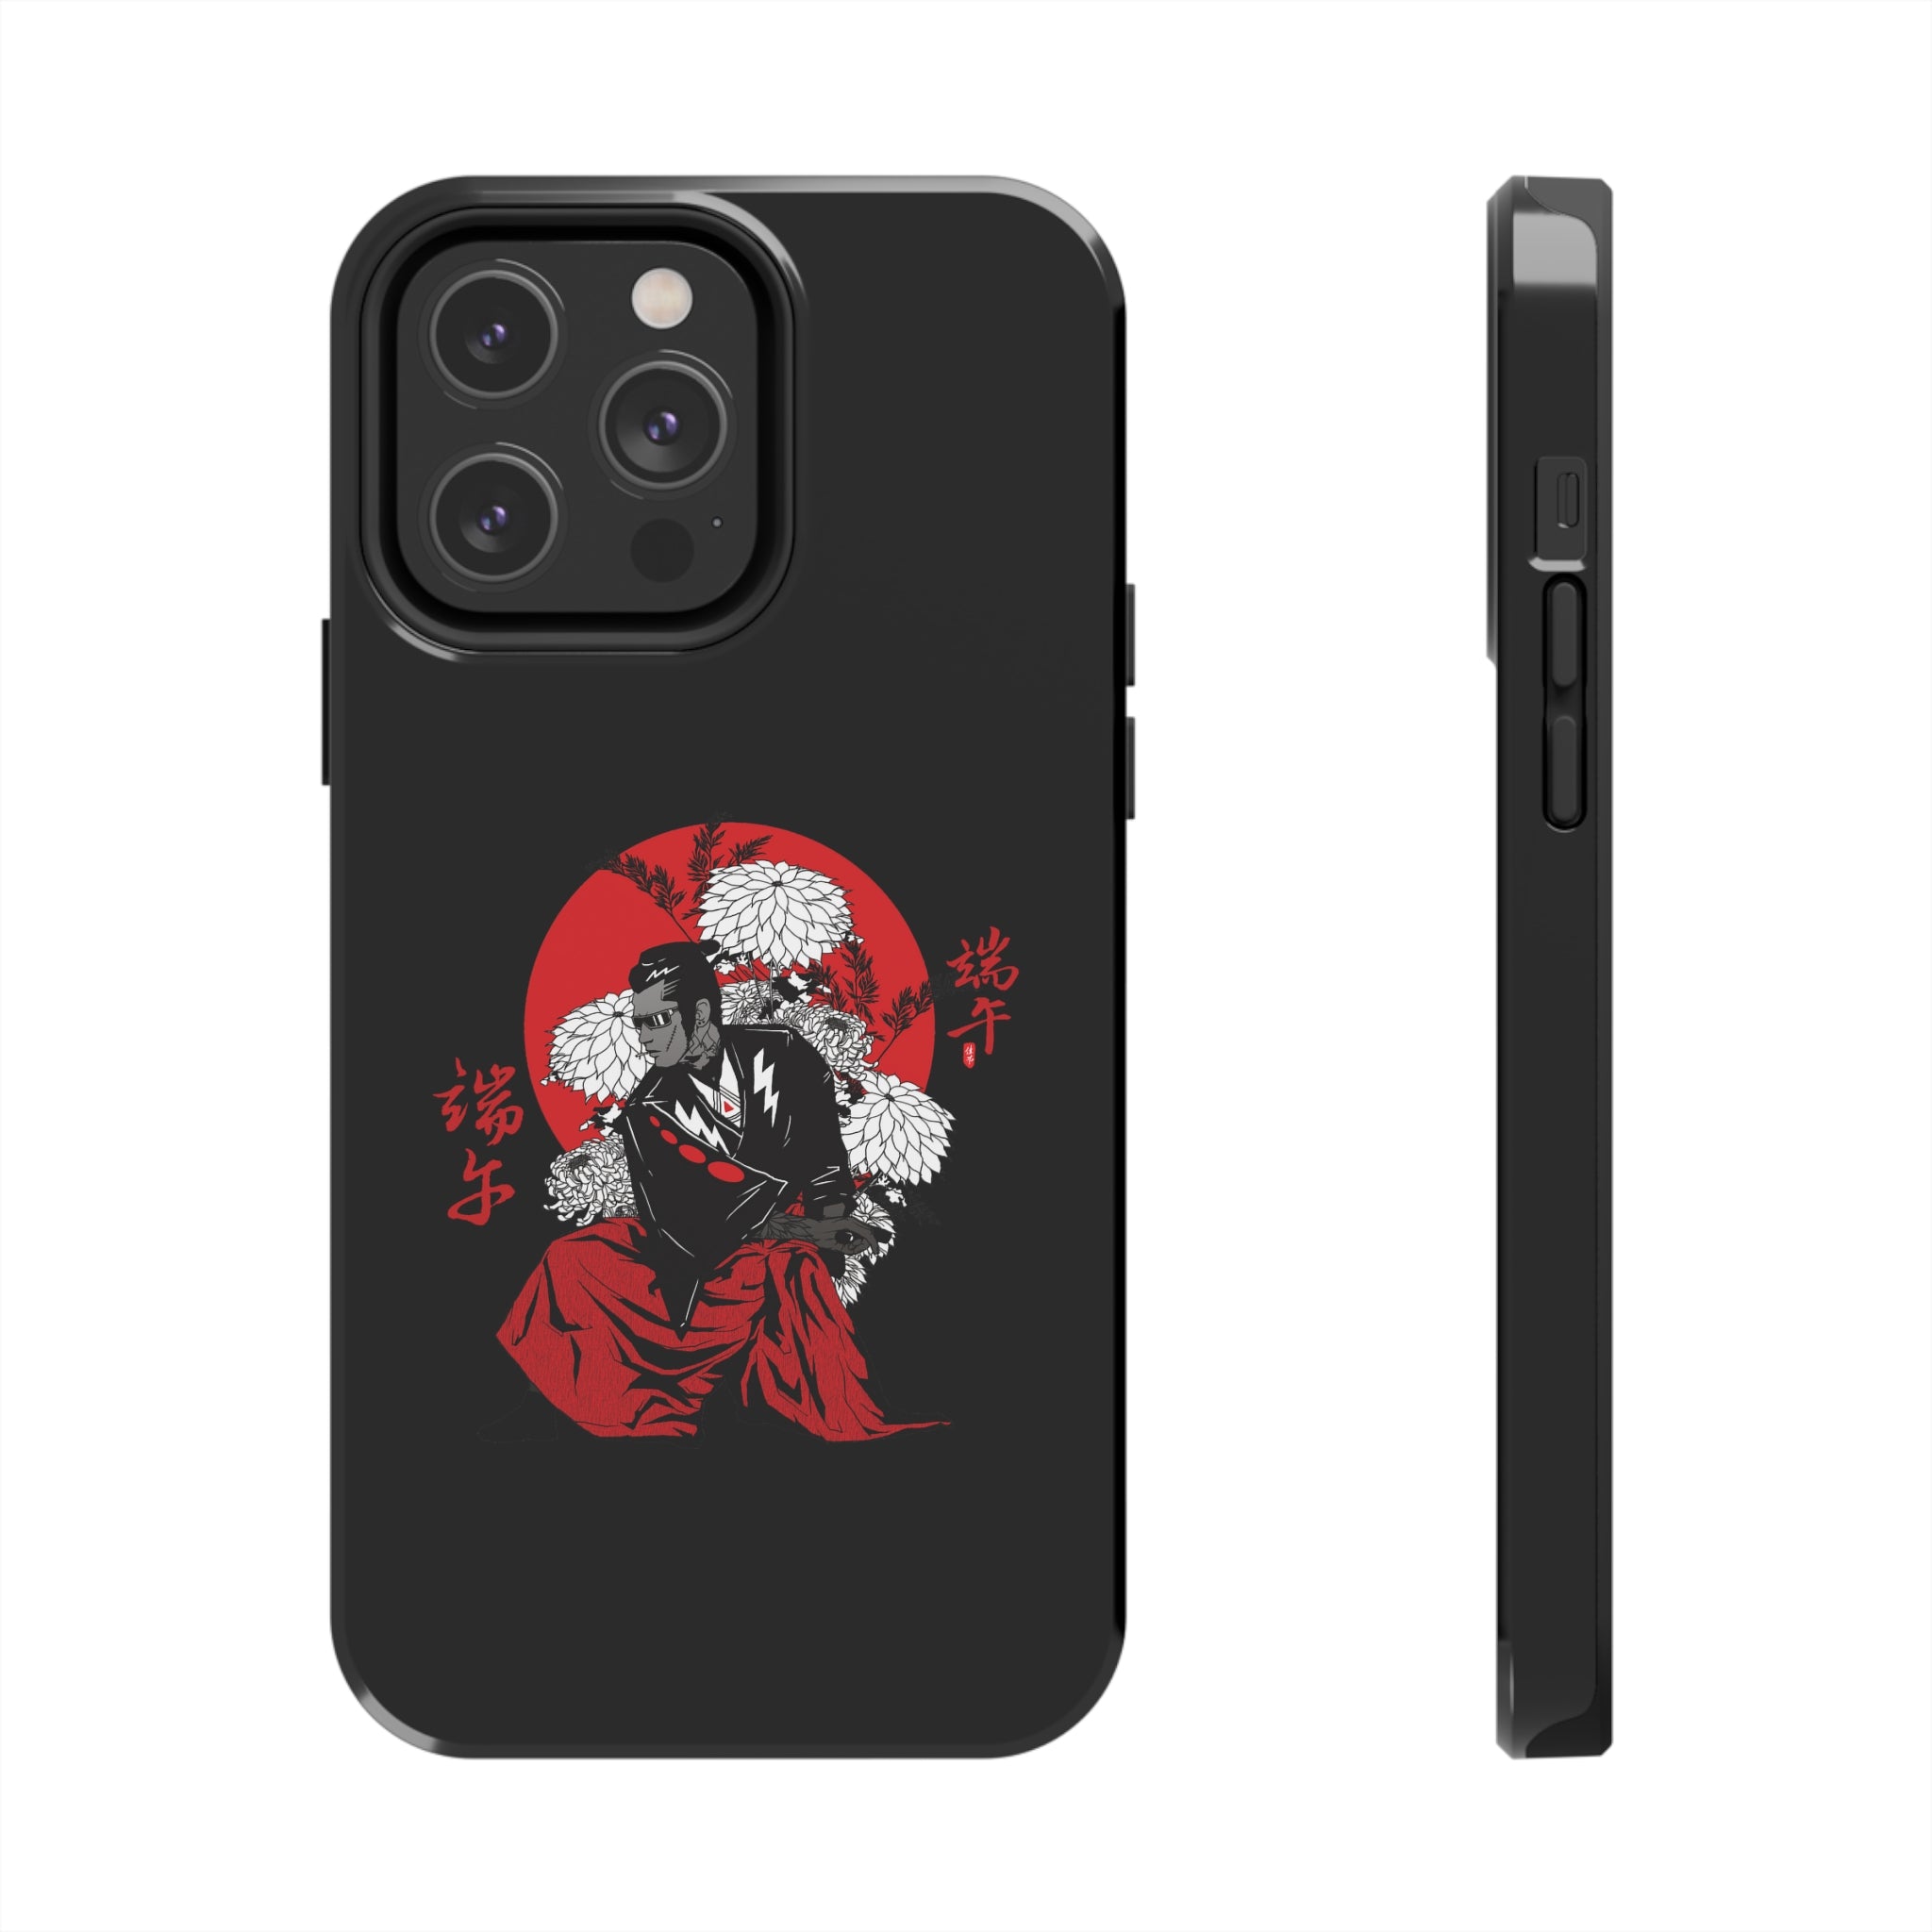 Tough Phone Case with Samurai Design